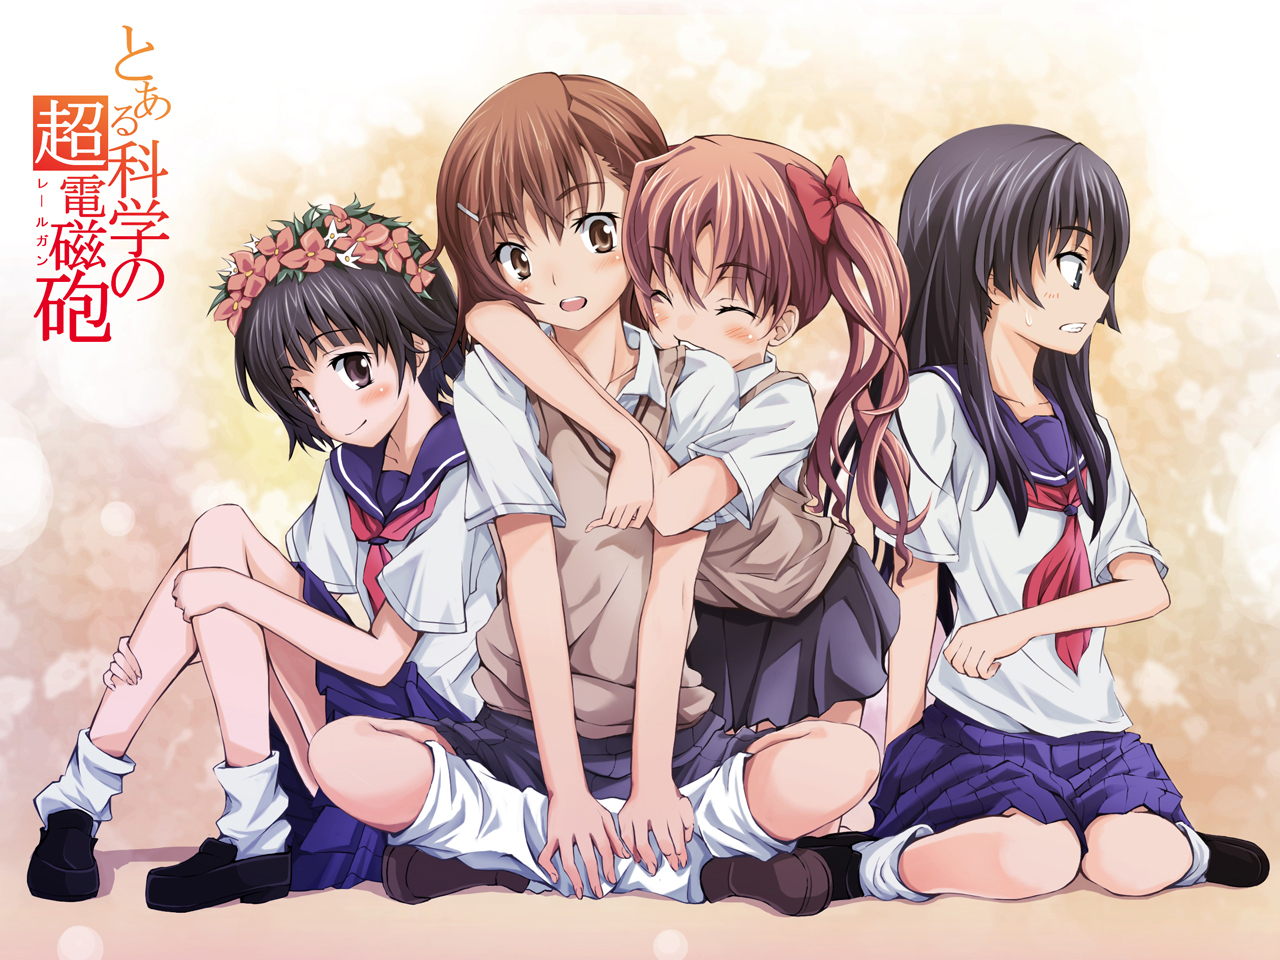 4 Girls Cute Anime - 1280x960 Wallpaper 